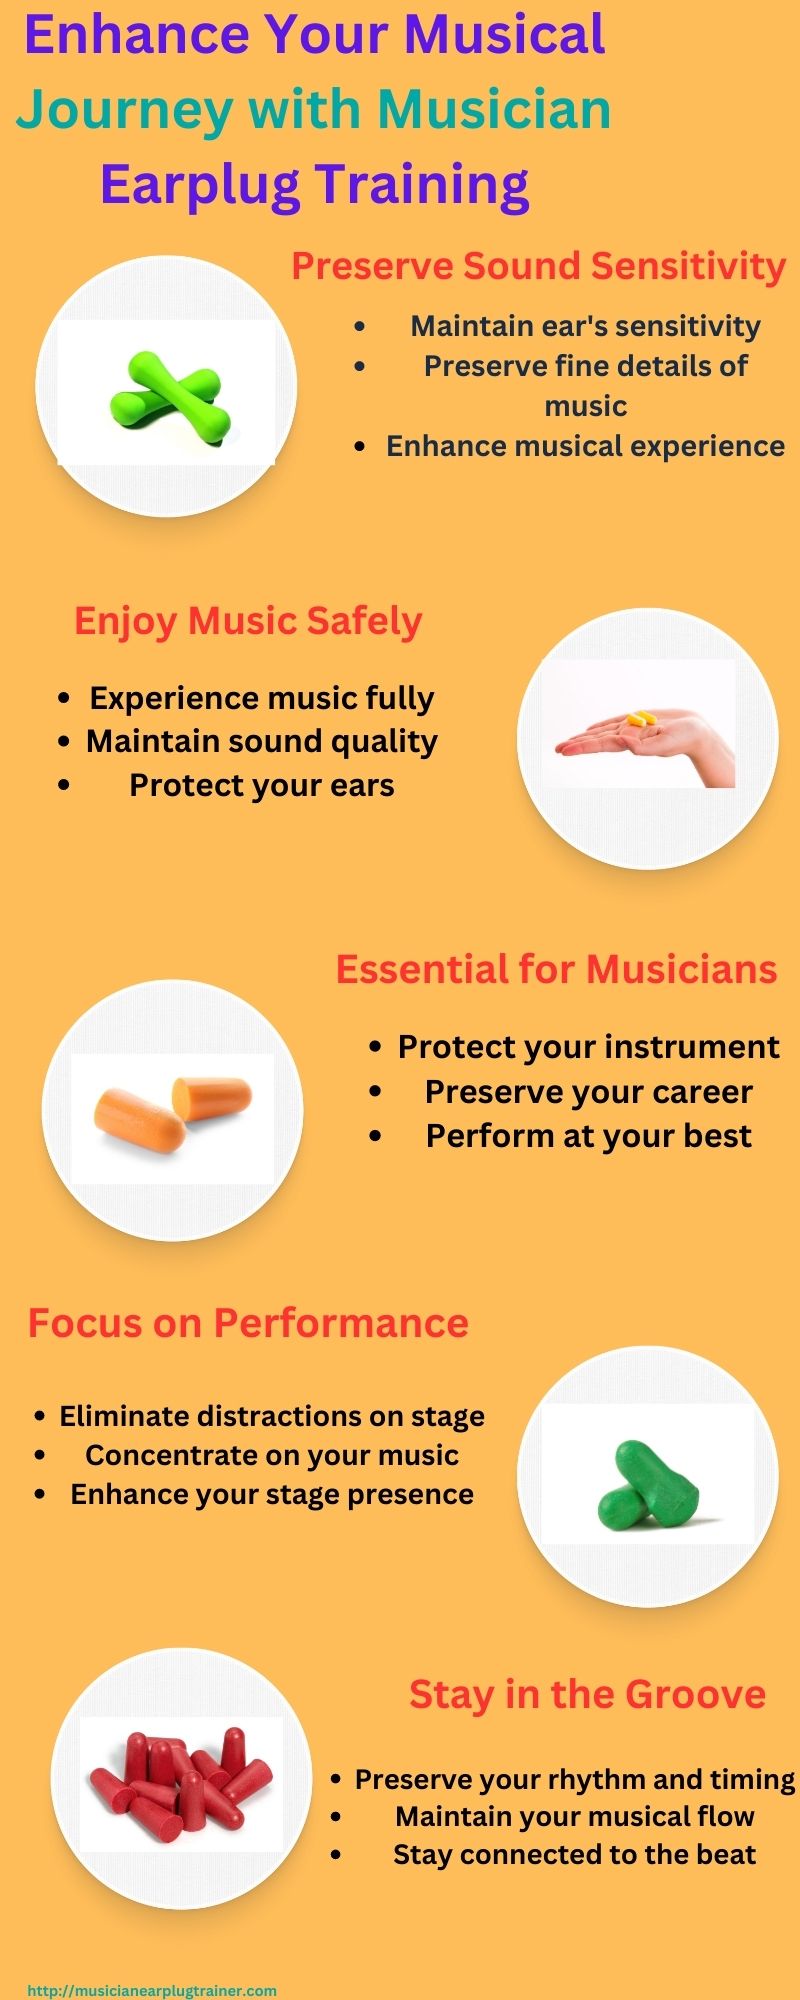  Enhance Your Musical Journey with Musician Earplug Training.